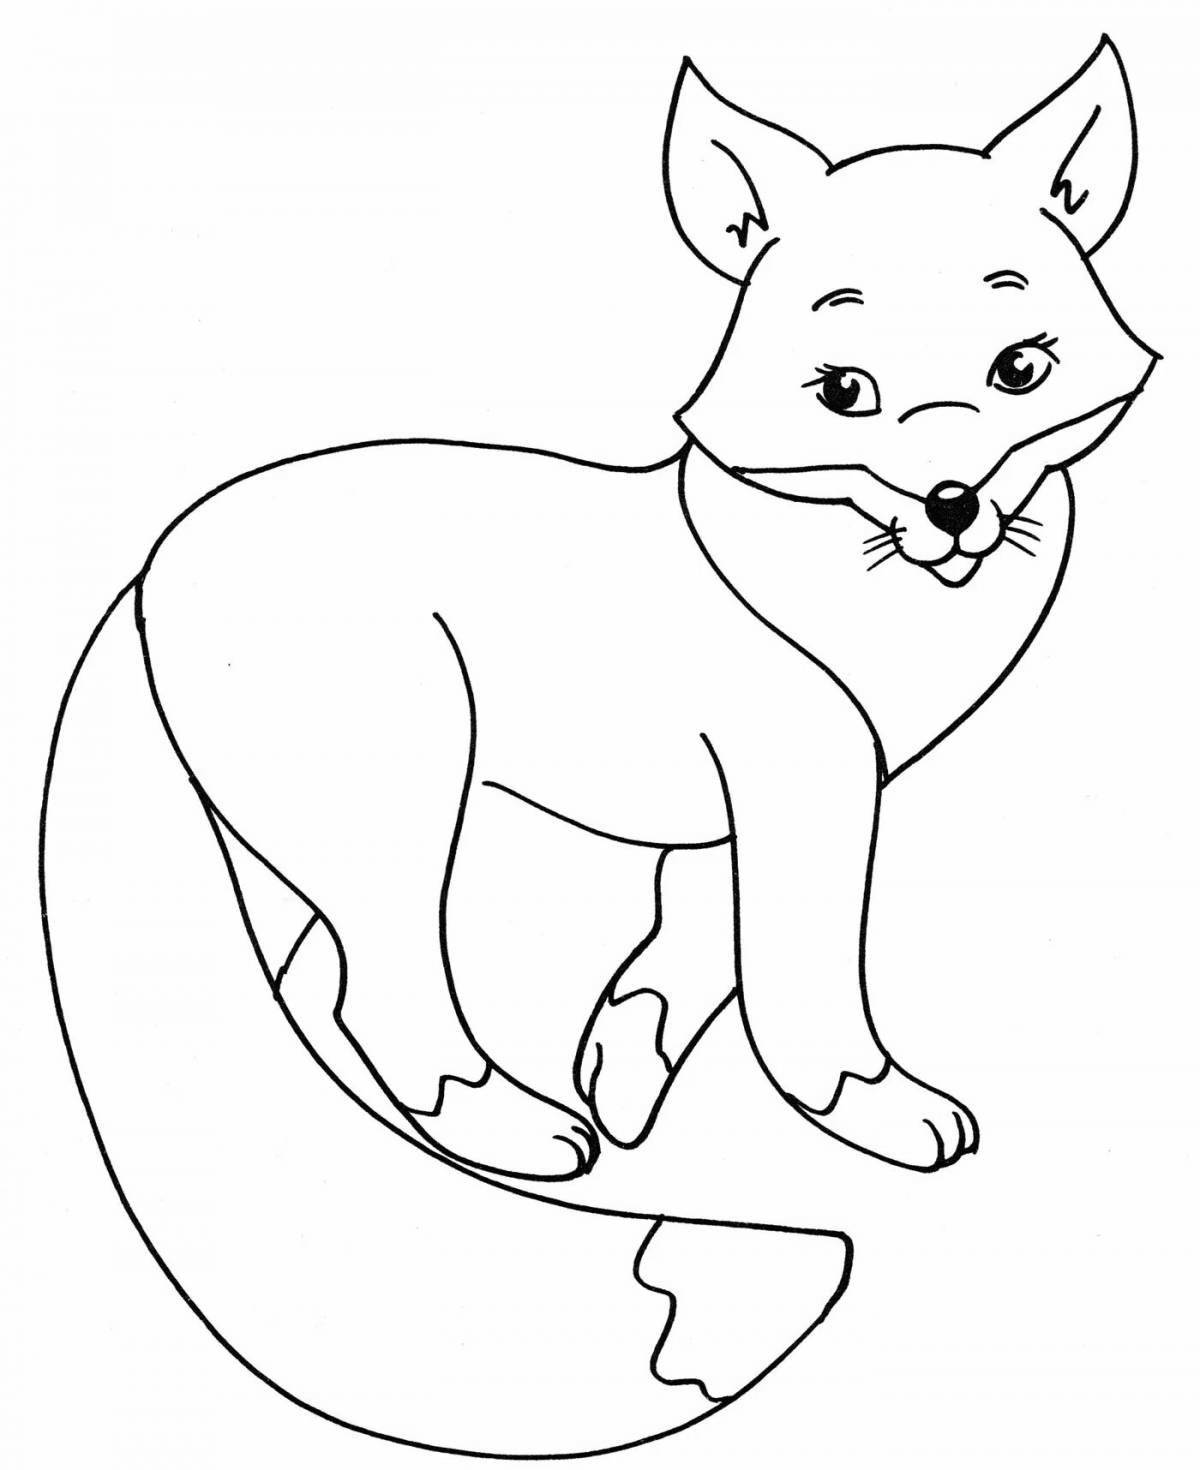 Violent fox coloring book for kids